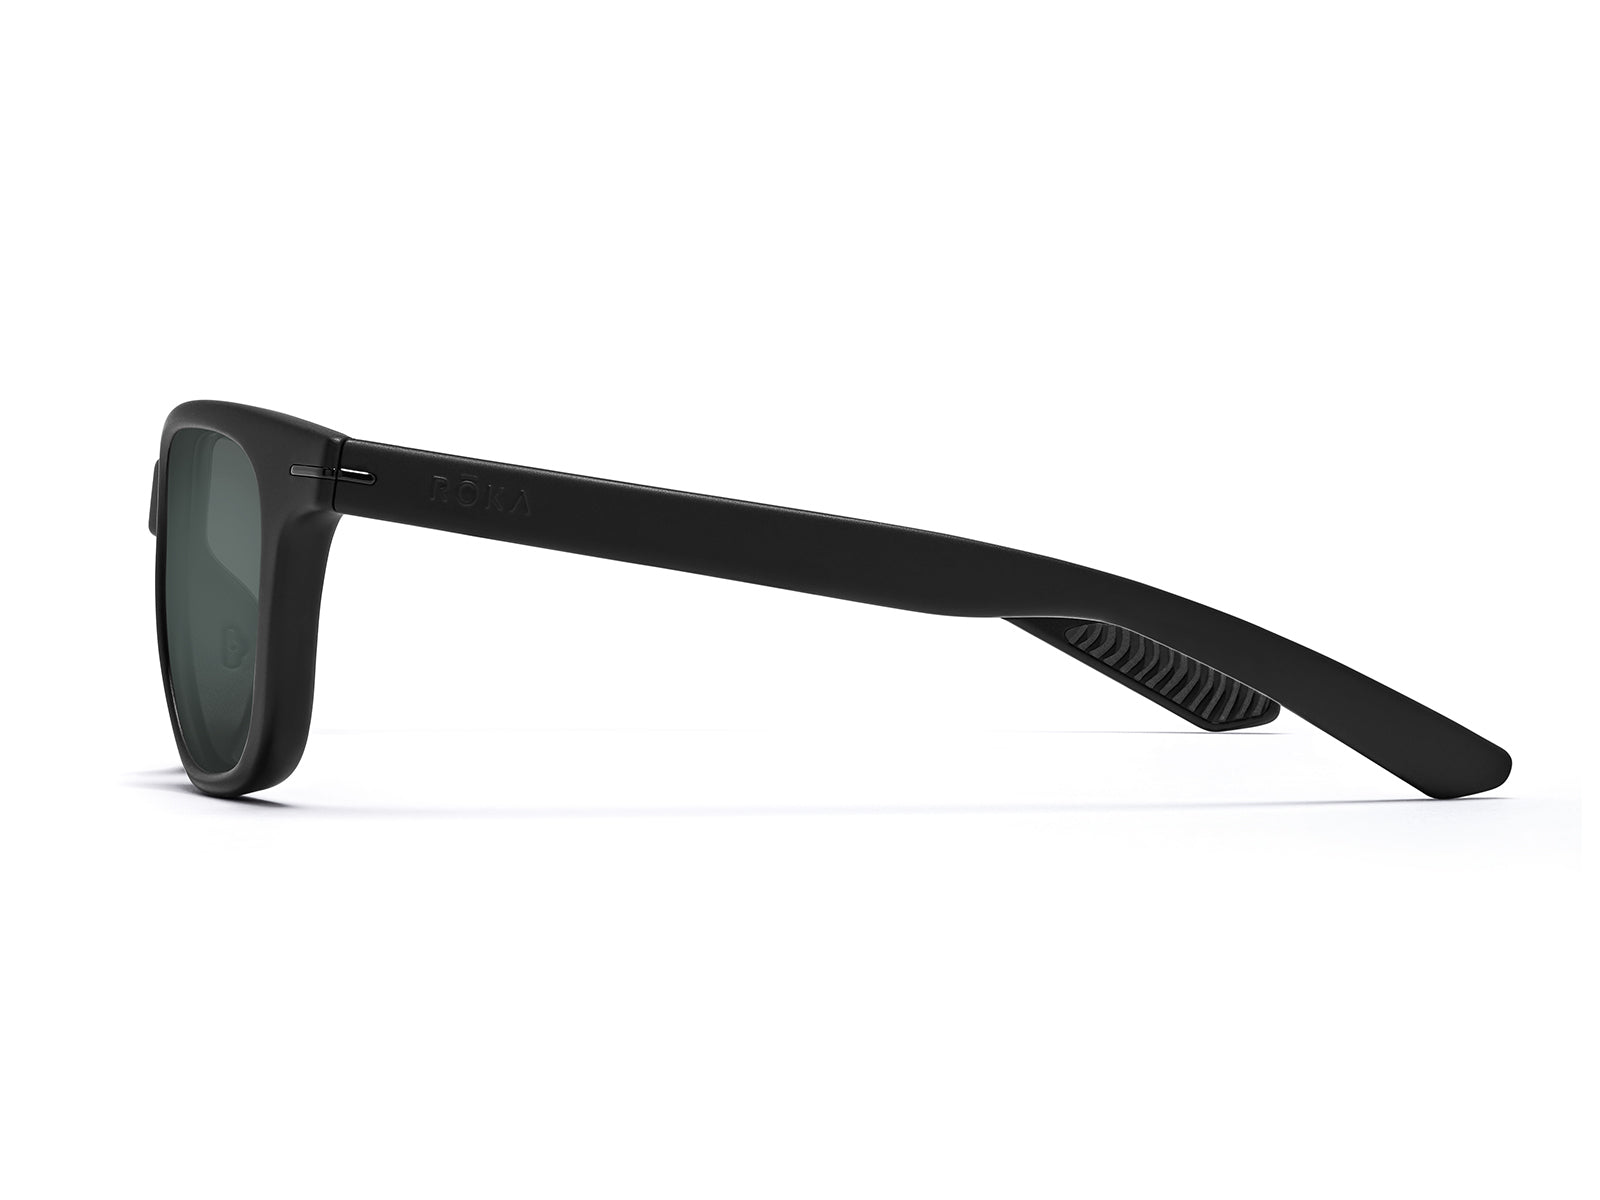 Roka Palmer Sunglasses with Sandalwood Frames - Dark Carbon (Polarized) Lens